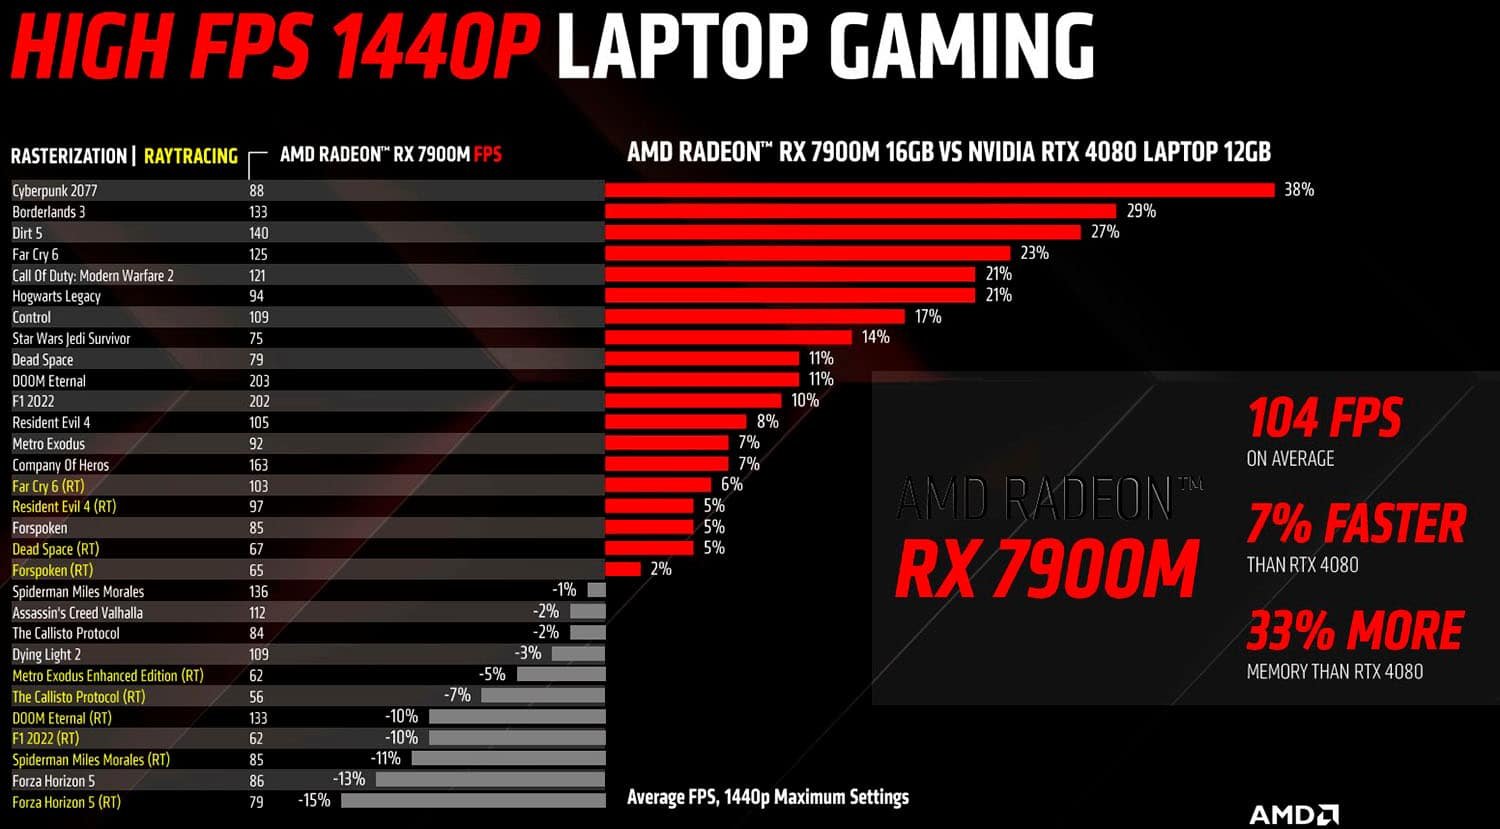 AMD Radeon RX 7900M vs NVIDIA GeForce RTX 4080 Laptop